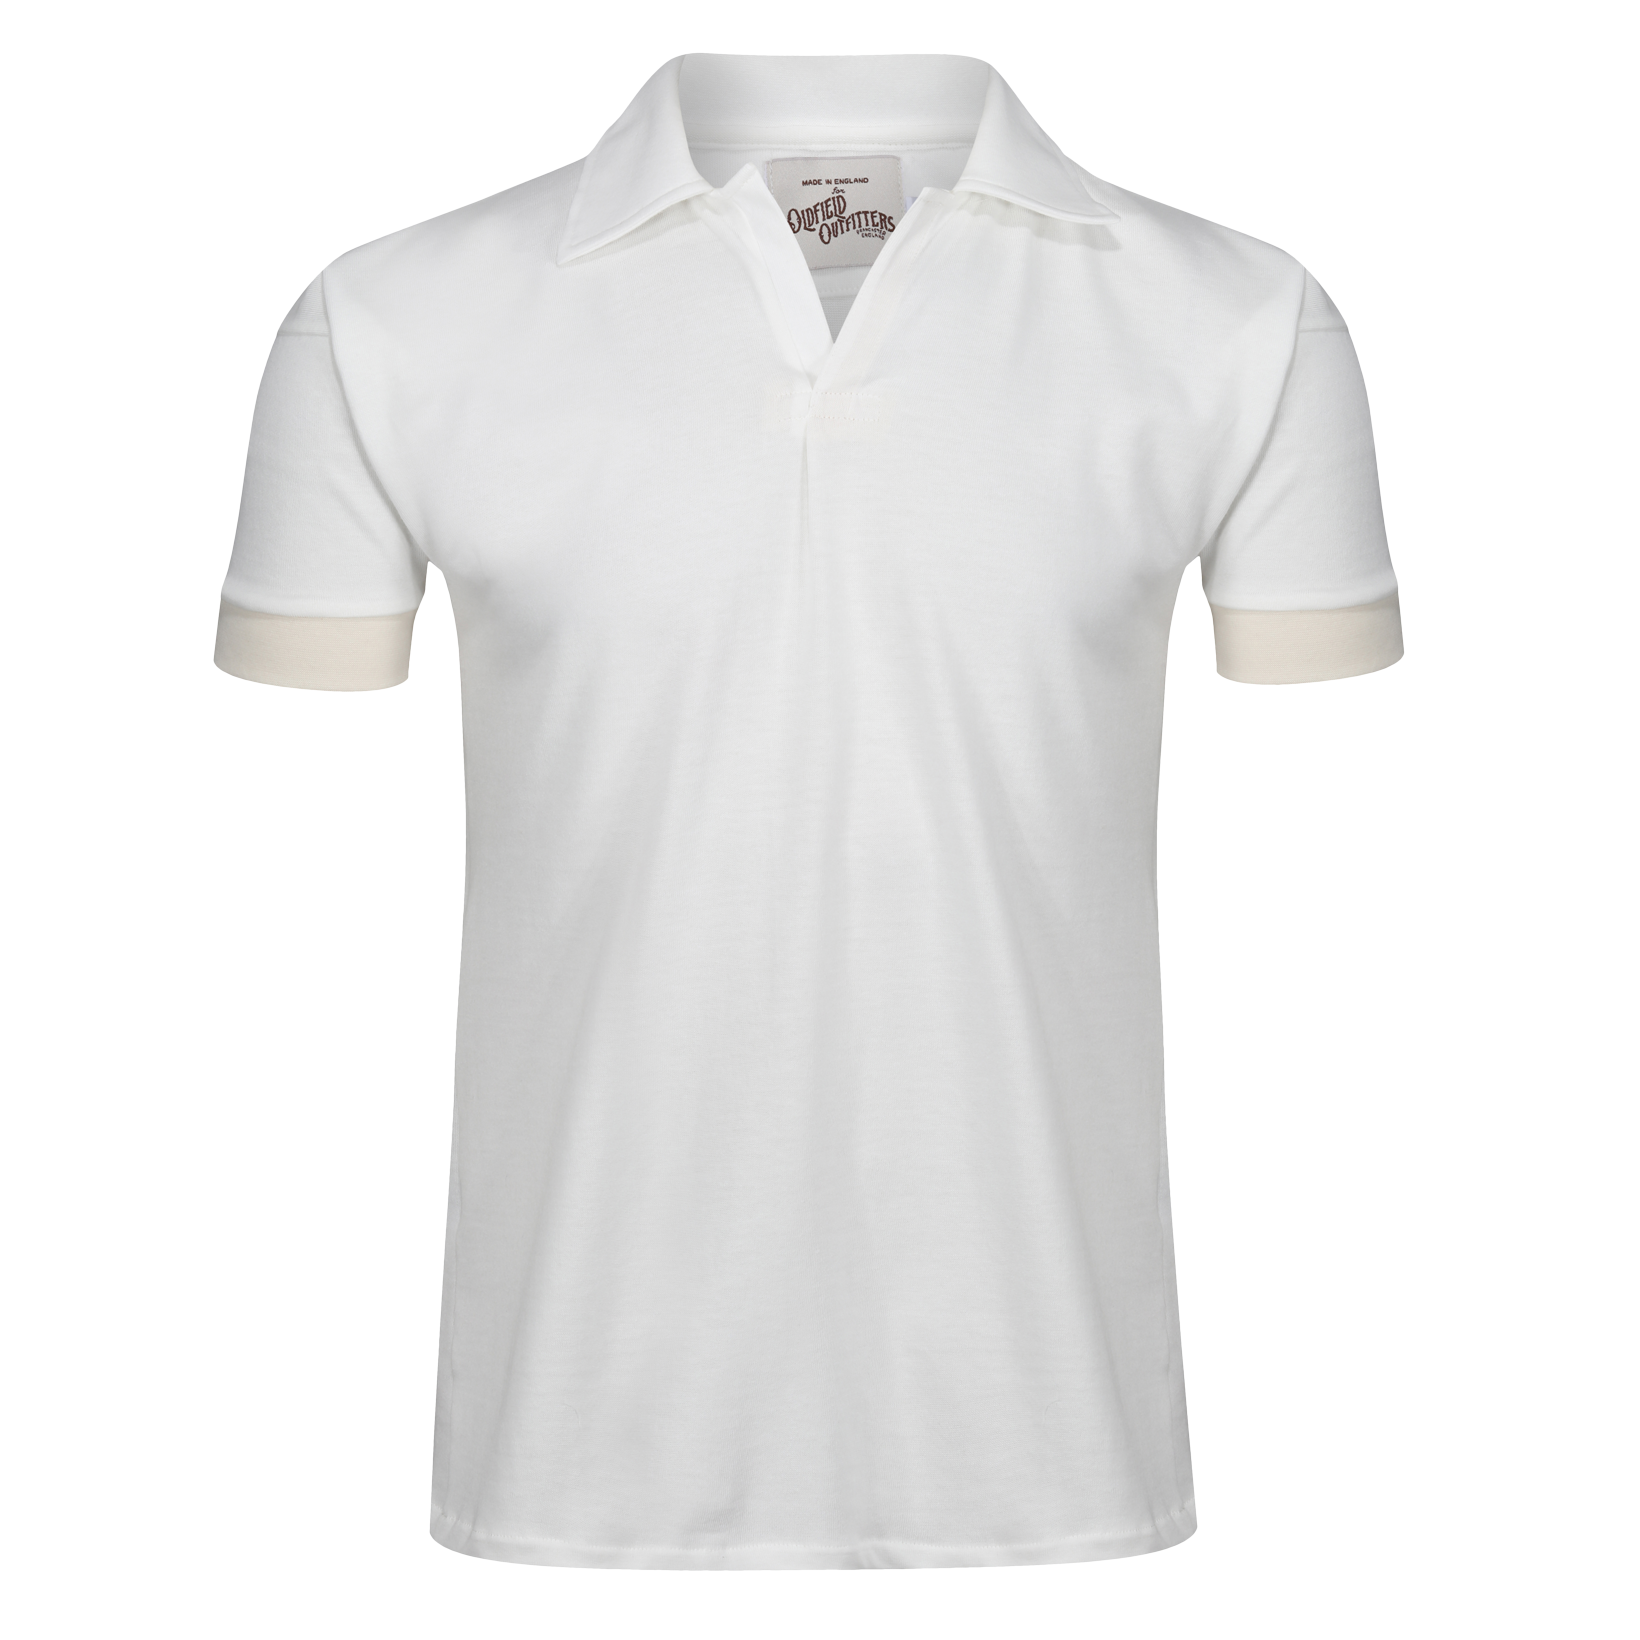 1940s Redford jersey cotton shirt